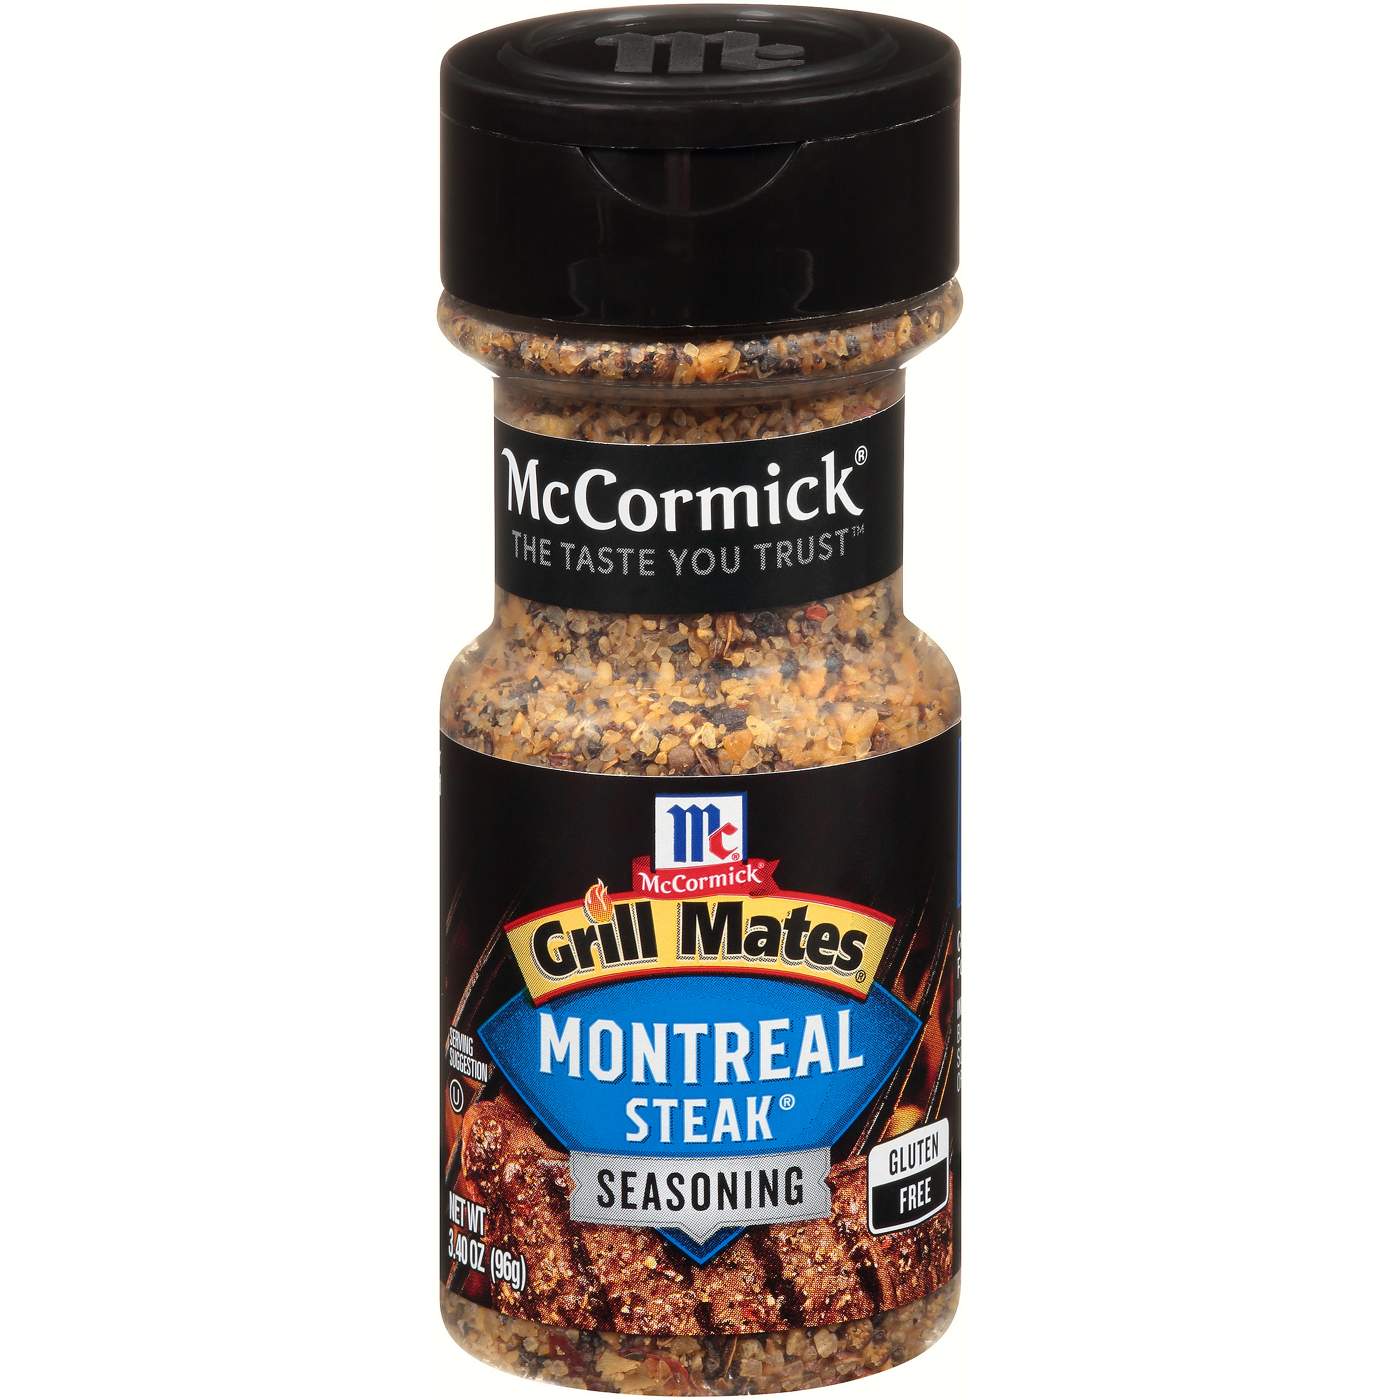 McCormick Grill Mates Montreal Steak Seasoning; image 1 of 6